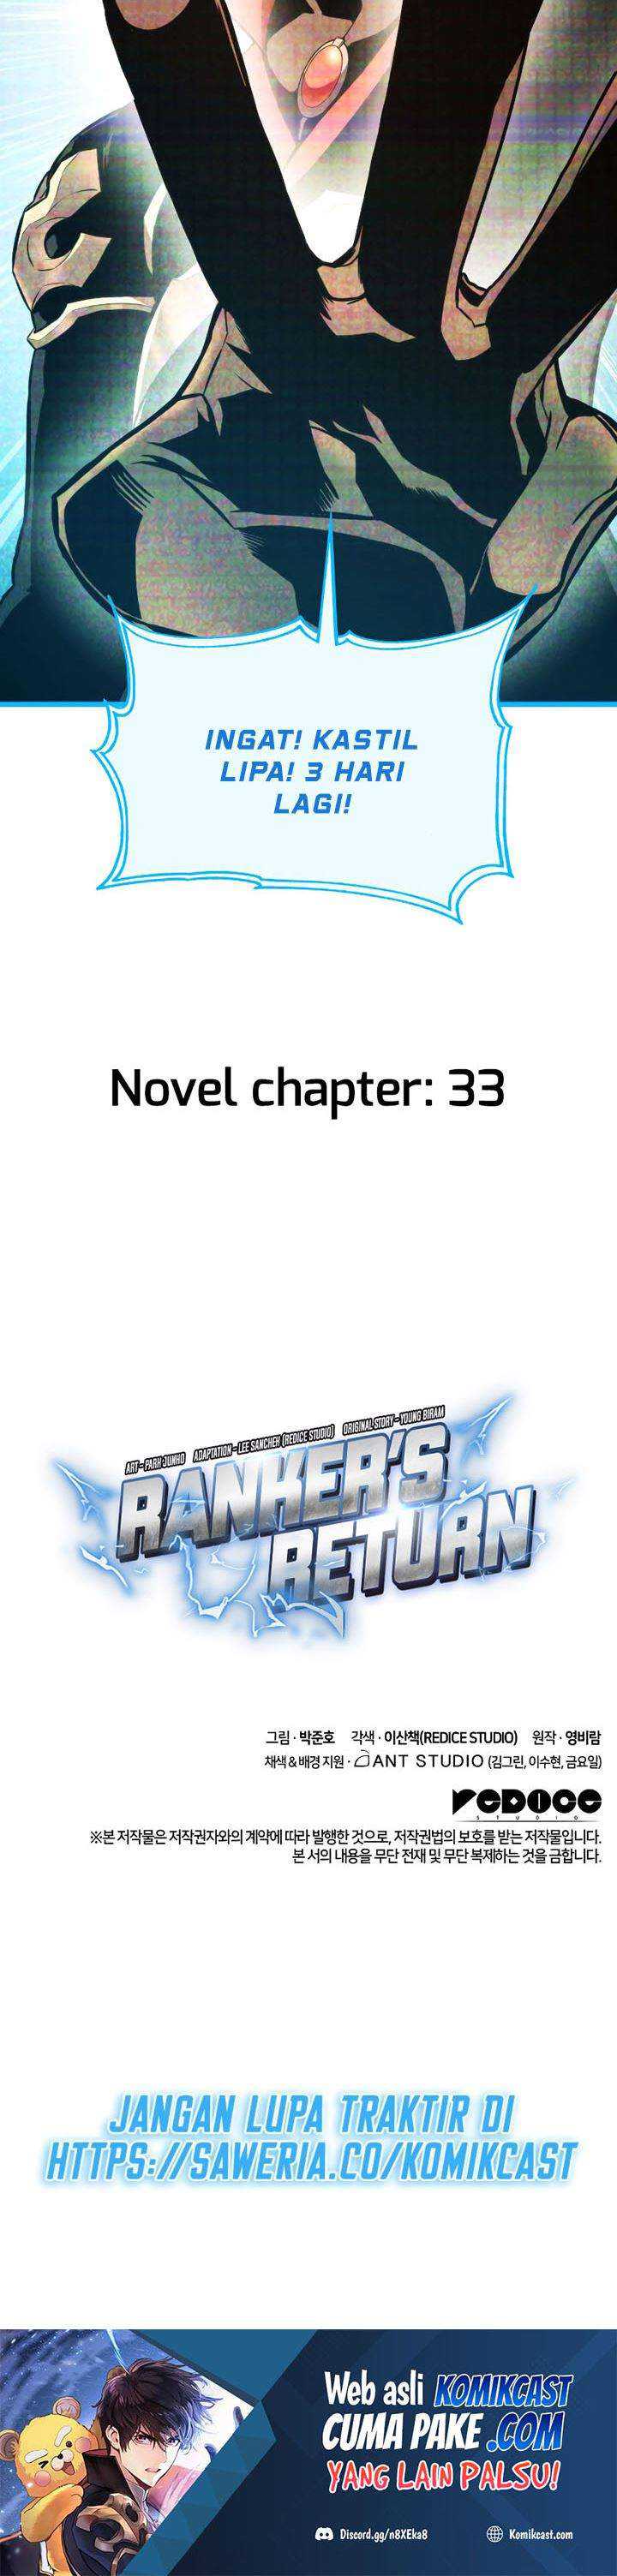 Ranker'S Return (Remake) Chapter 28 - 333